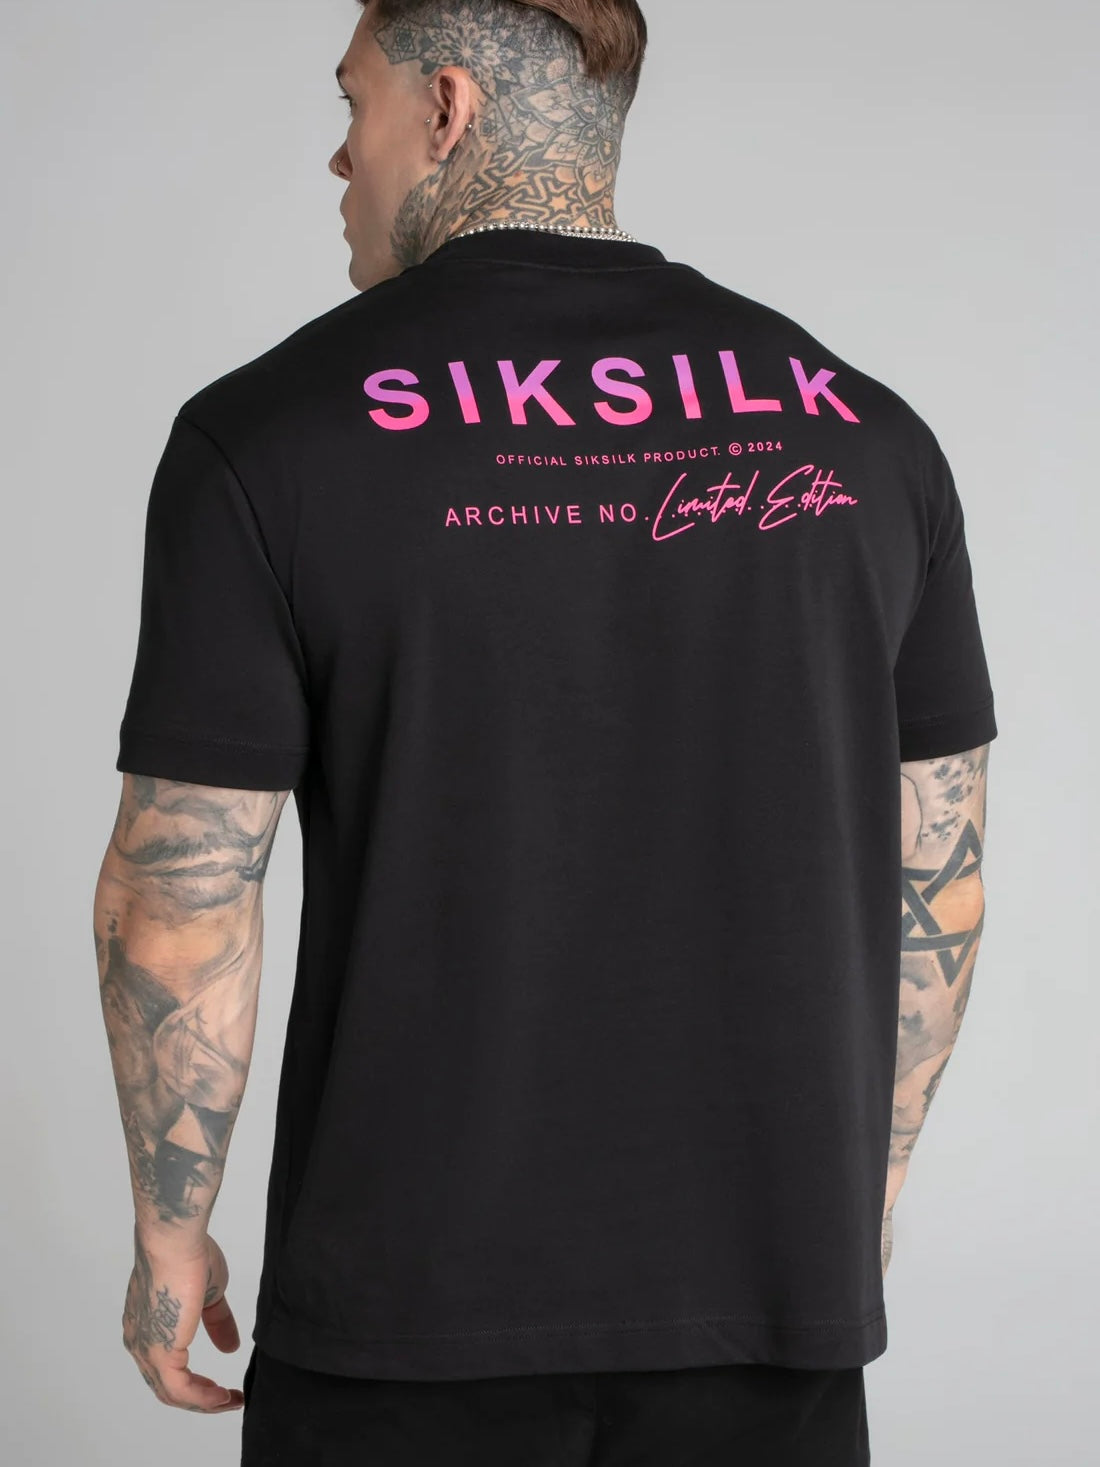 Siksilk - Limited Edition black t-shirt